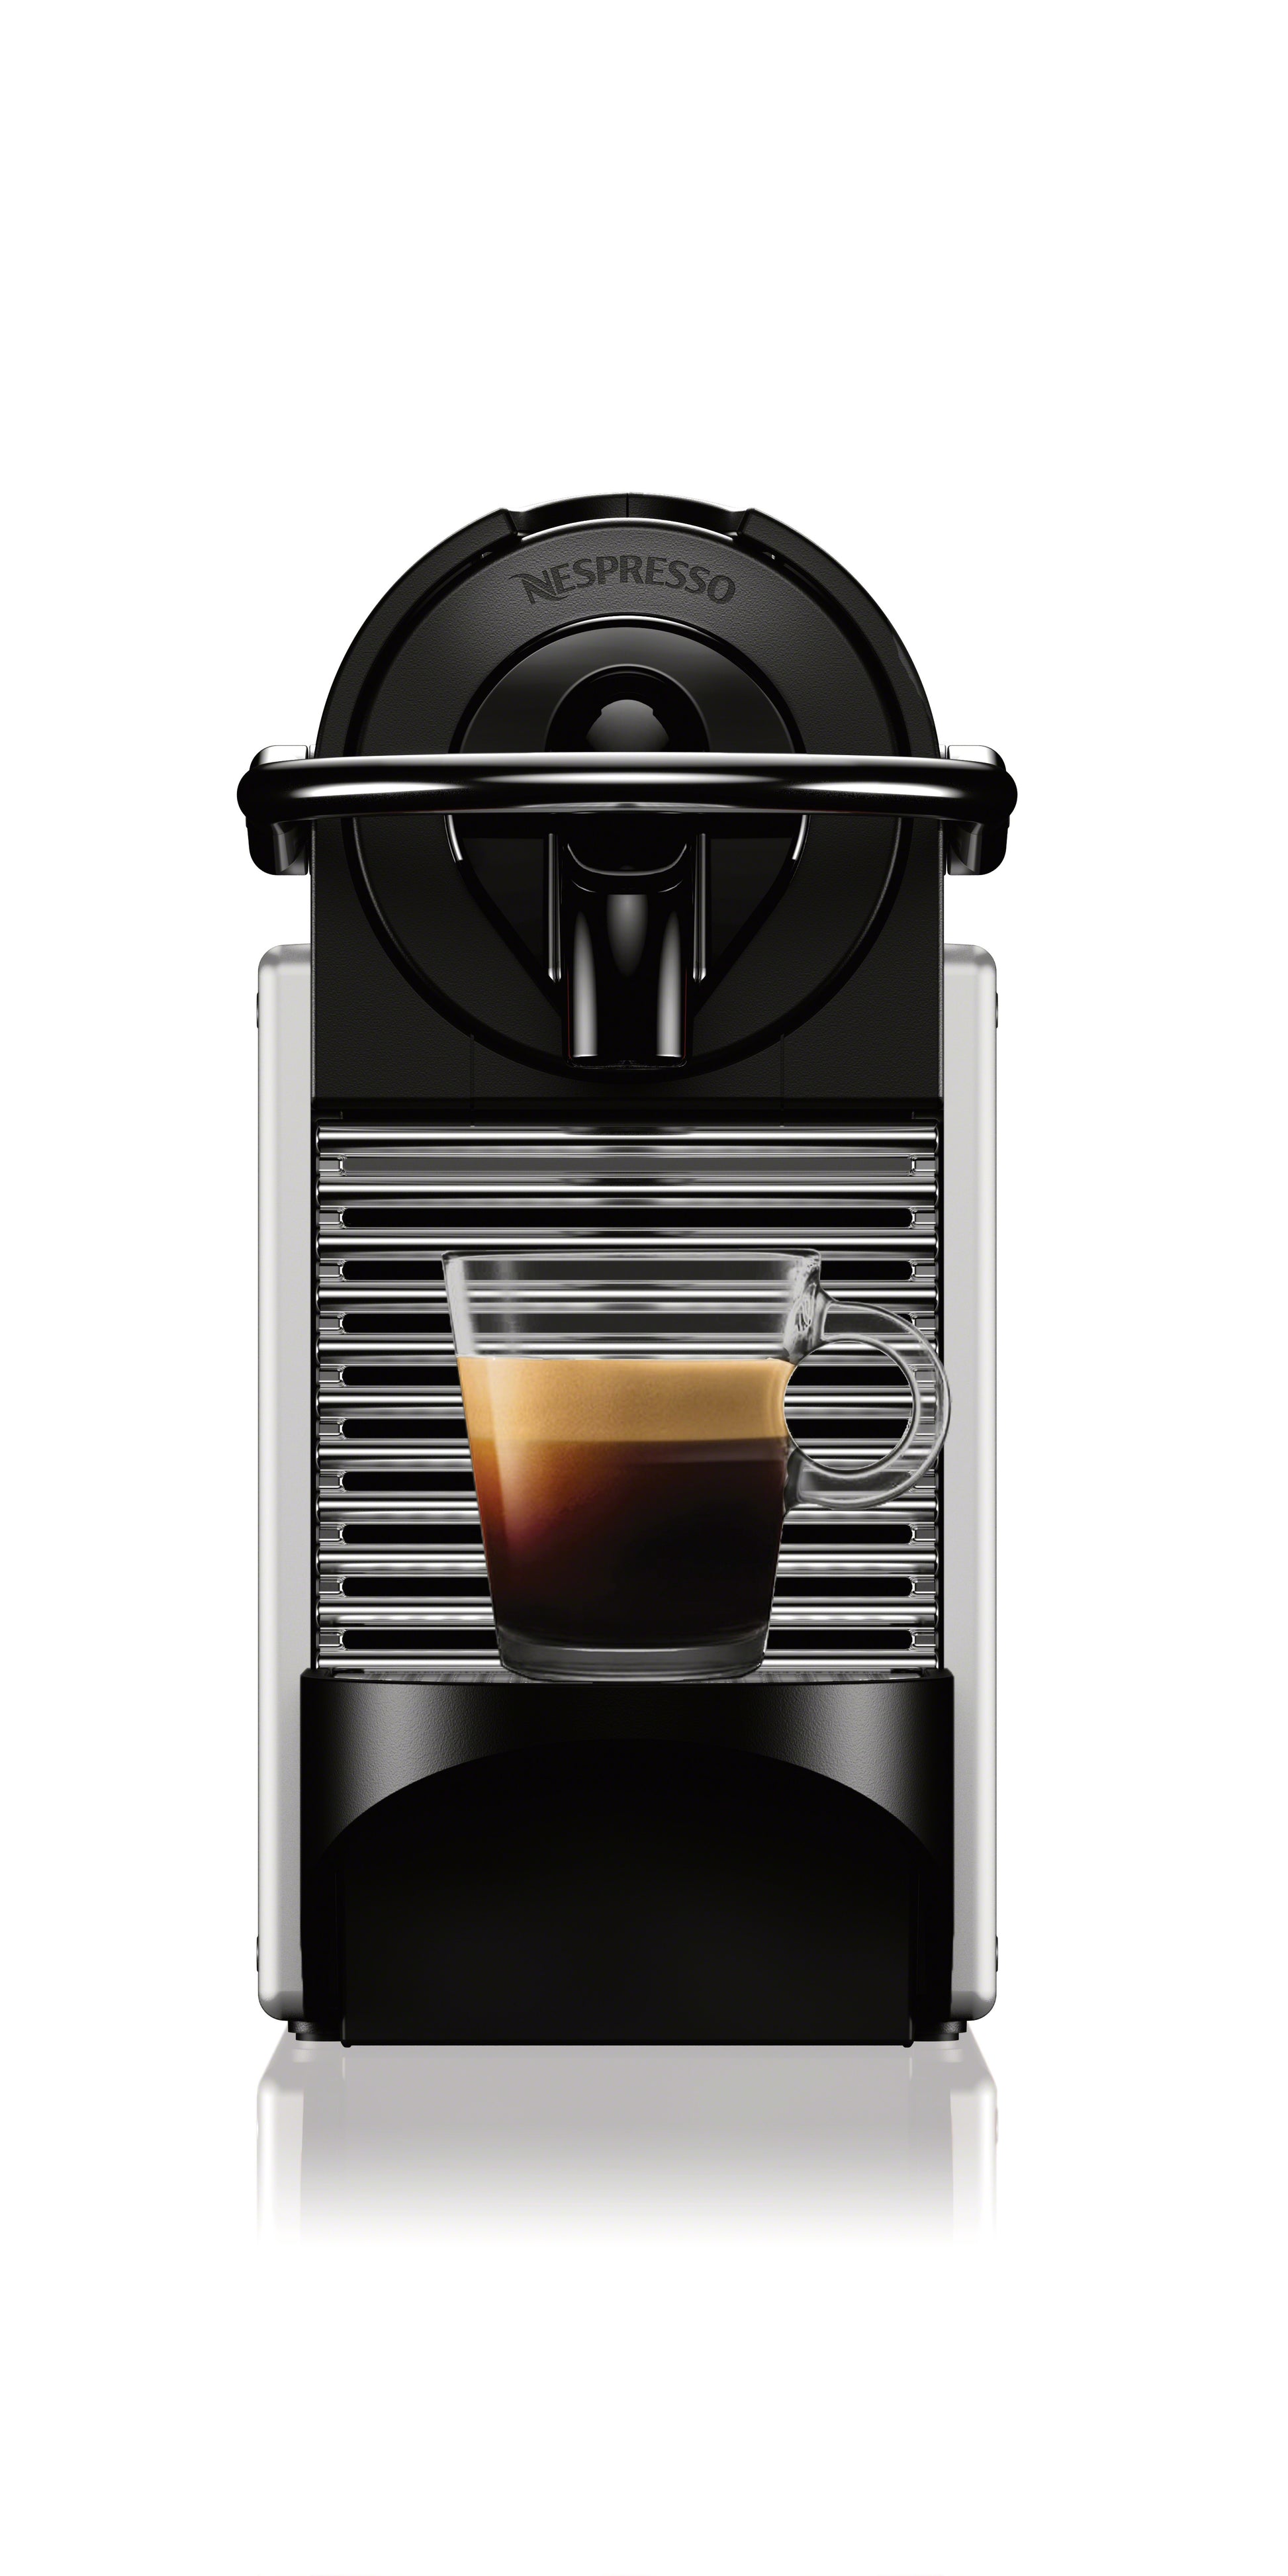 Nespresso Pixie Espresso Machine by De'Longhi with Aeroccino Milk